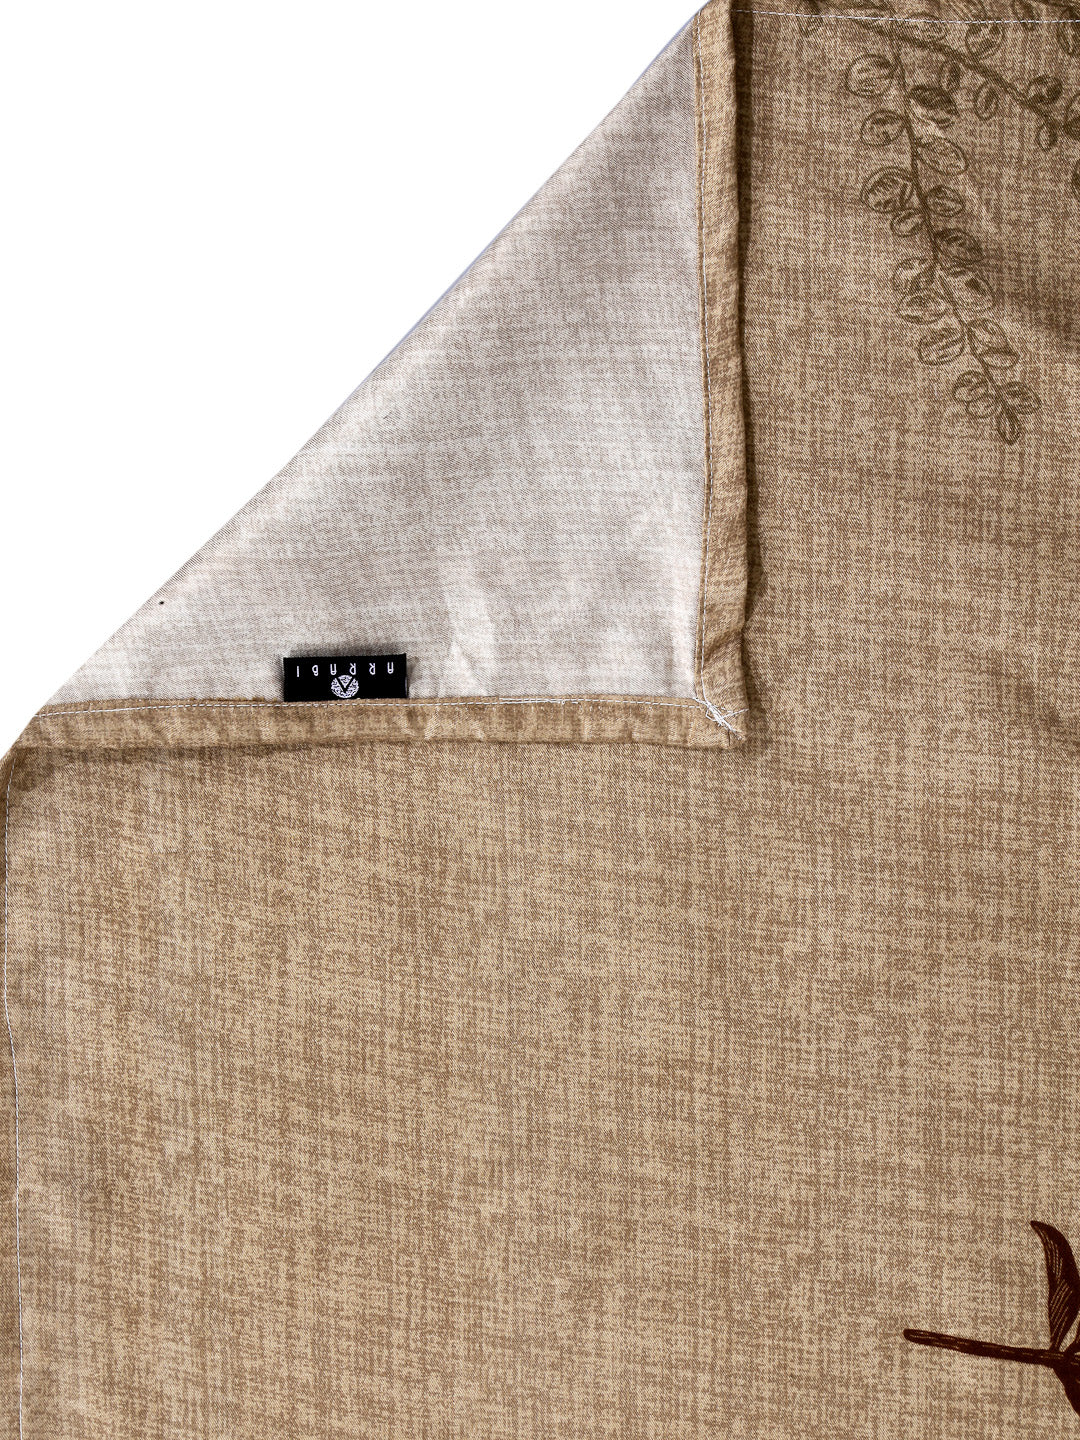 Arrabi Brown Floral TC Cotton Blend King Size Bedsheet with 2 Pillow Covers (250 x 220 cm)